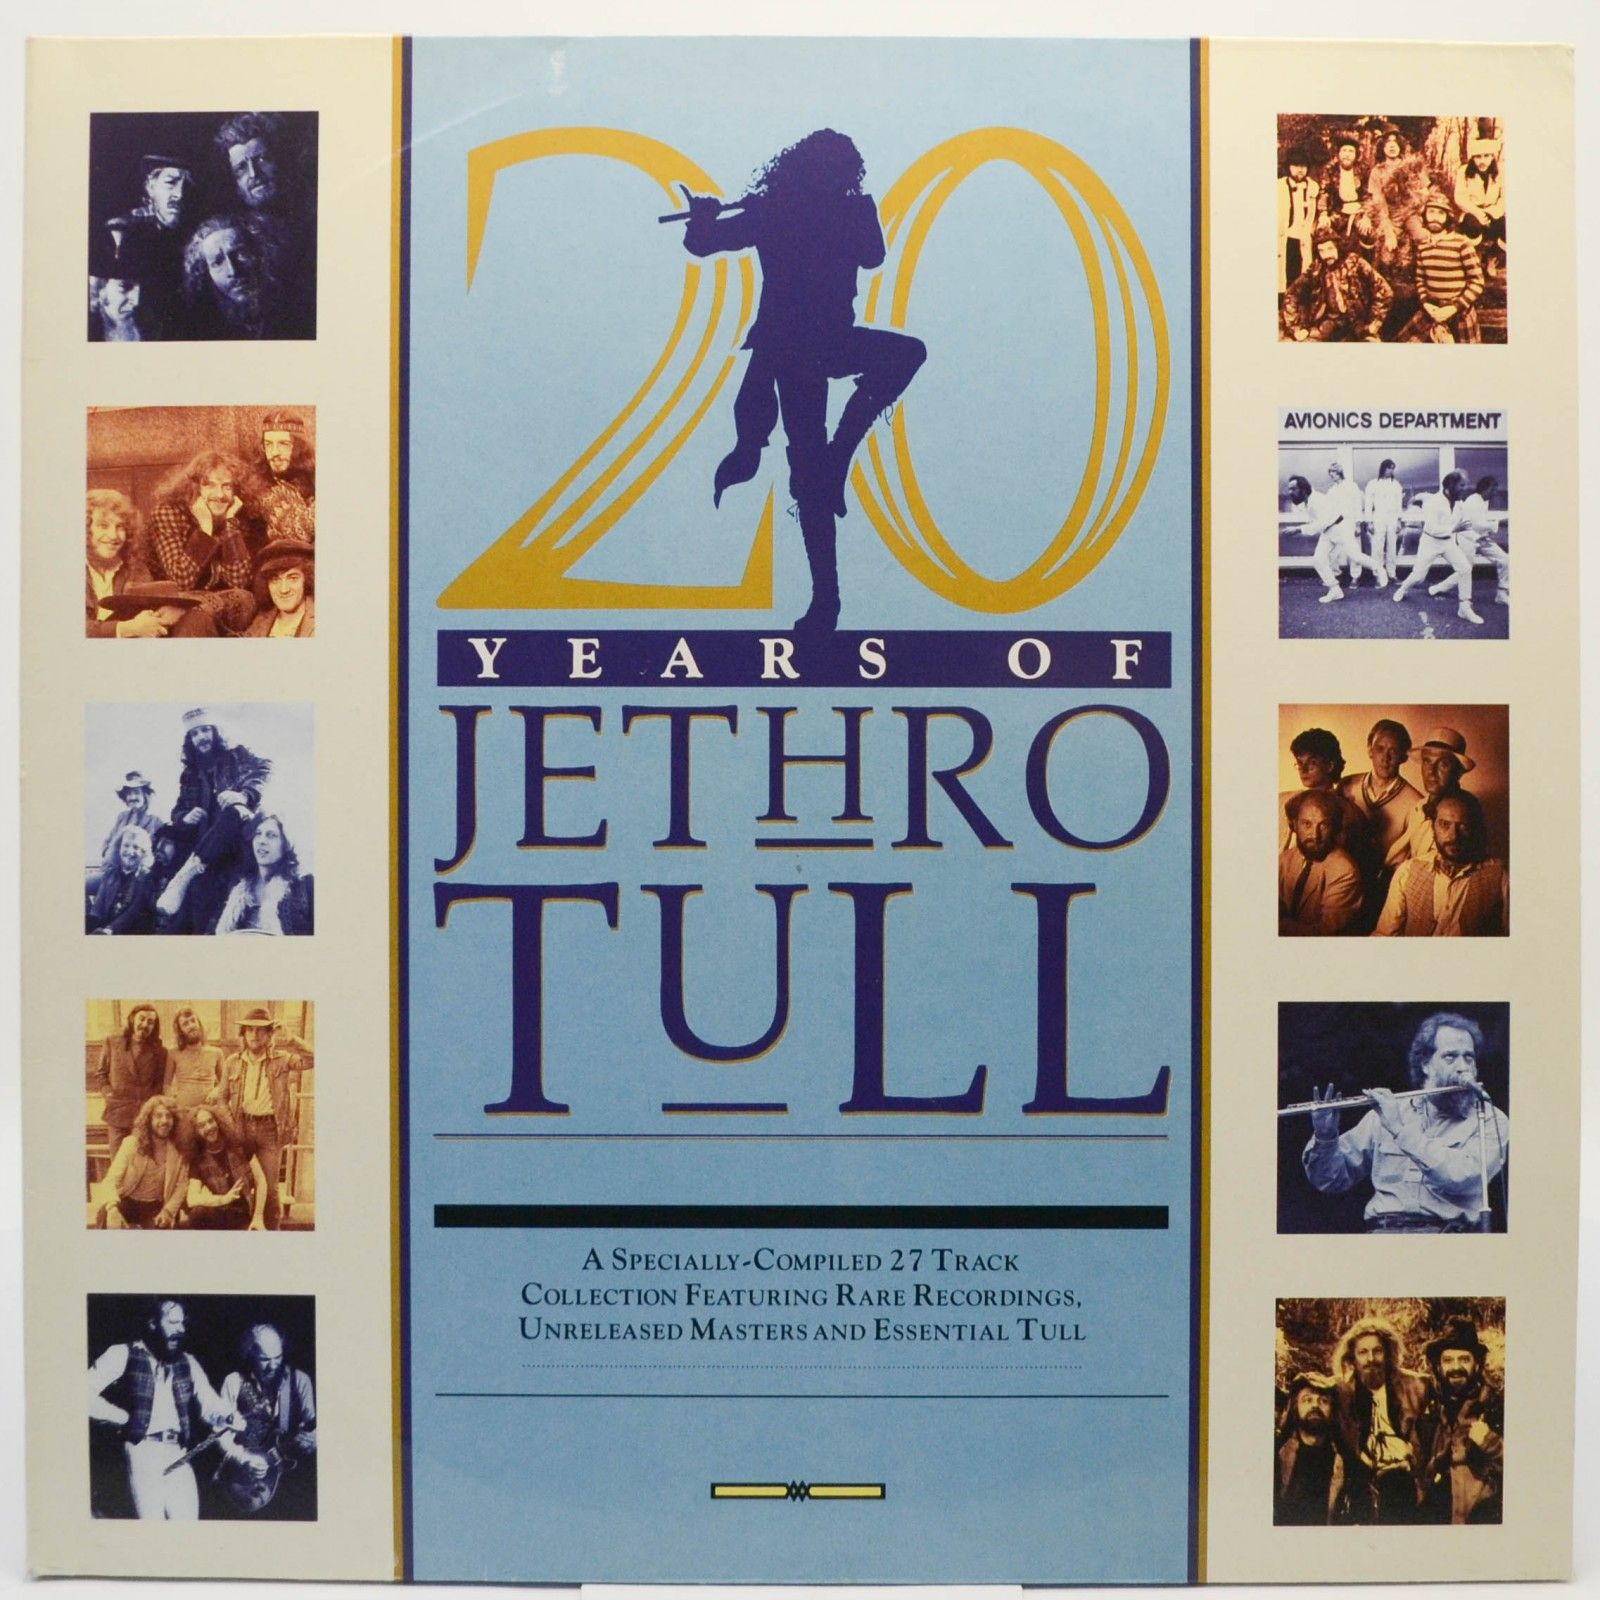 Jethro Tull — 20 Years Of Jethro Tull (2LP), 1988